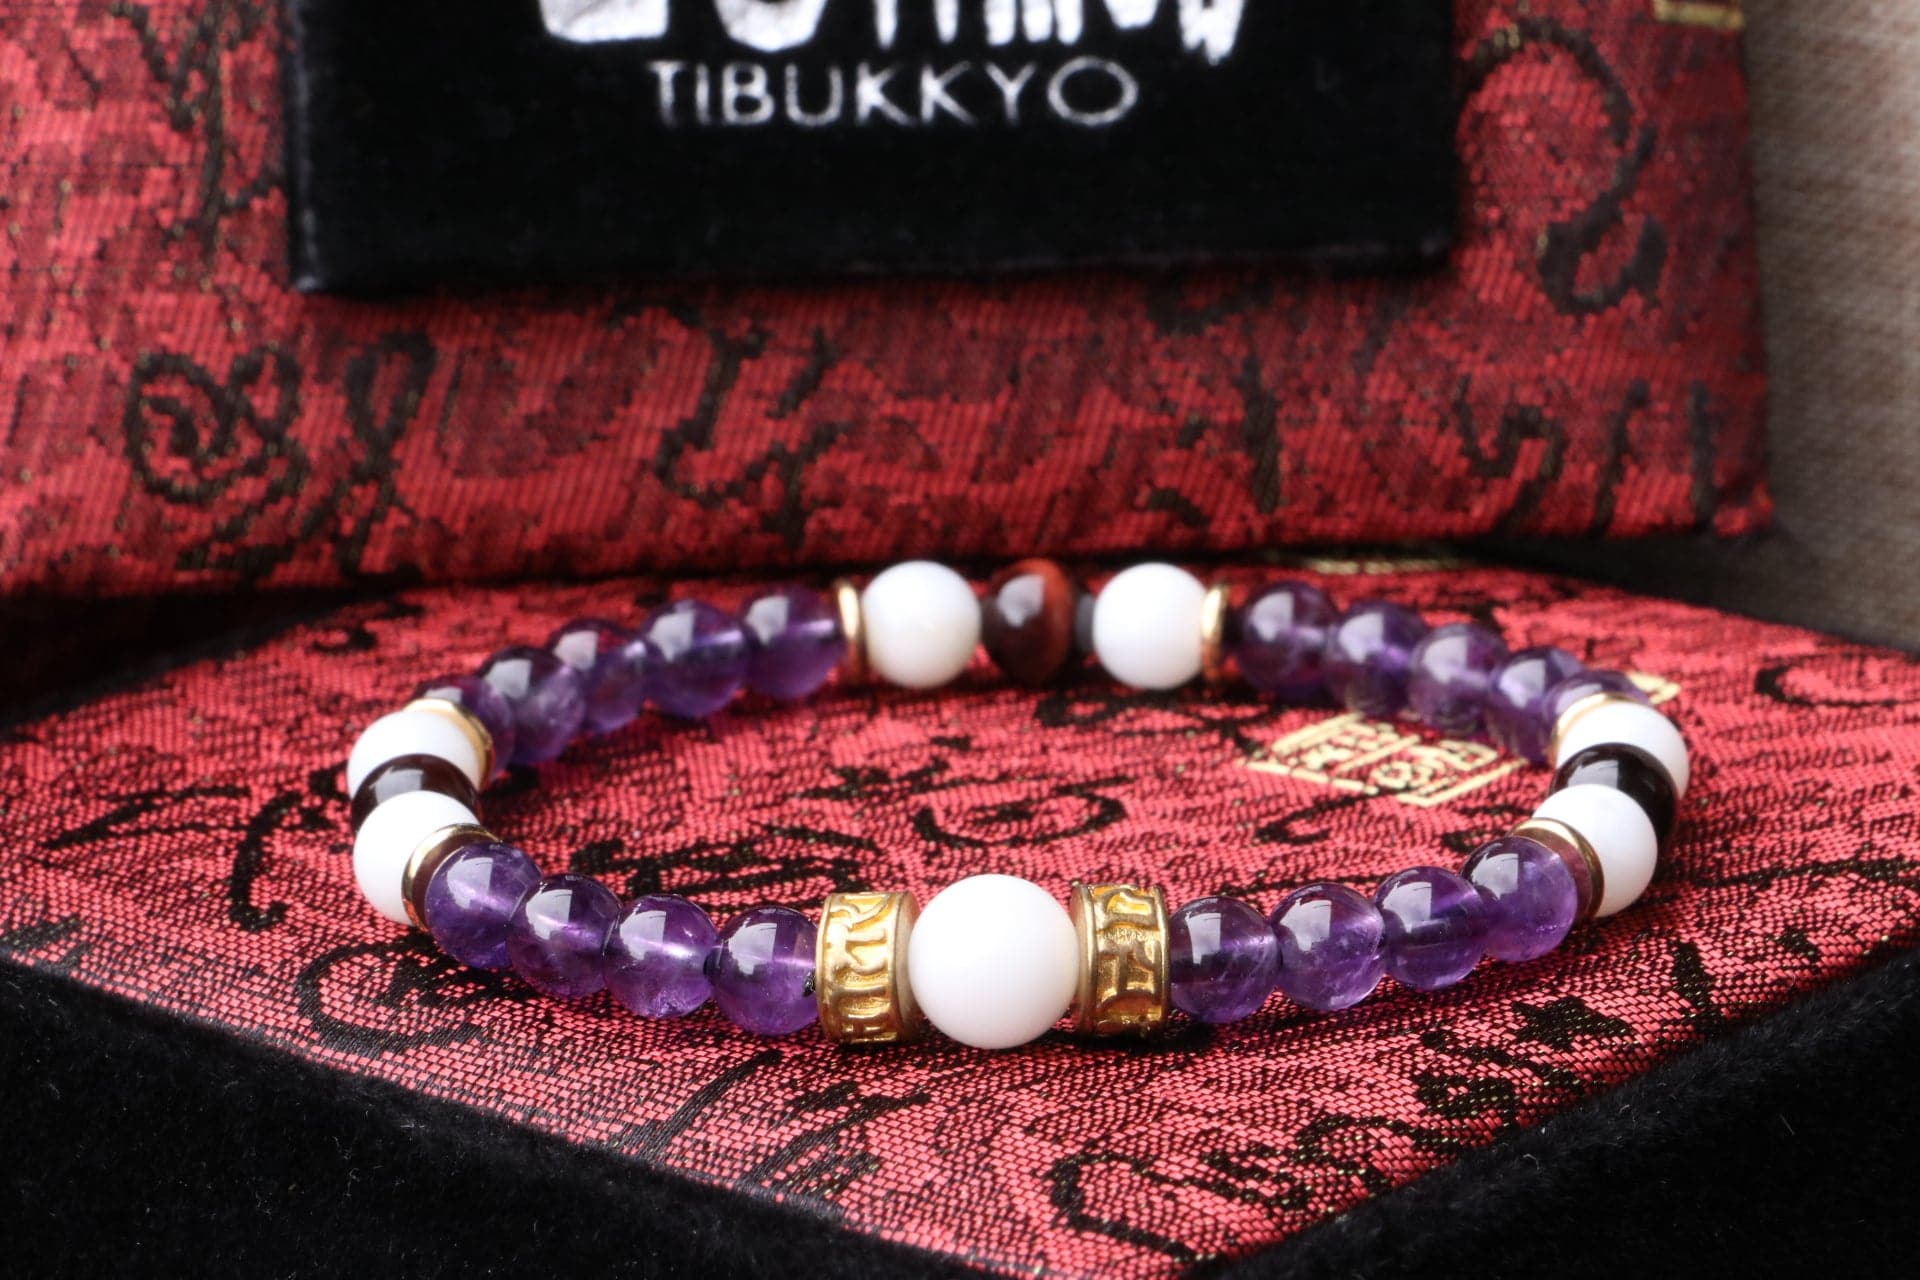 TIBUKKYO Taiwan Derong Collection | Raw ore non-dyed amethyst bracelet 6mm round beads | Tridacna spacer beads